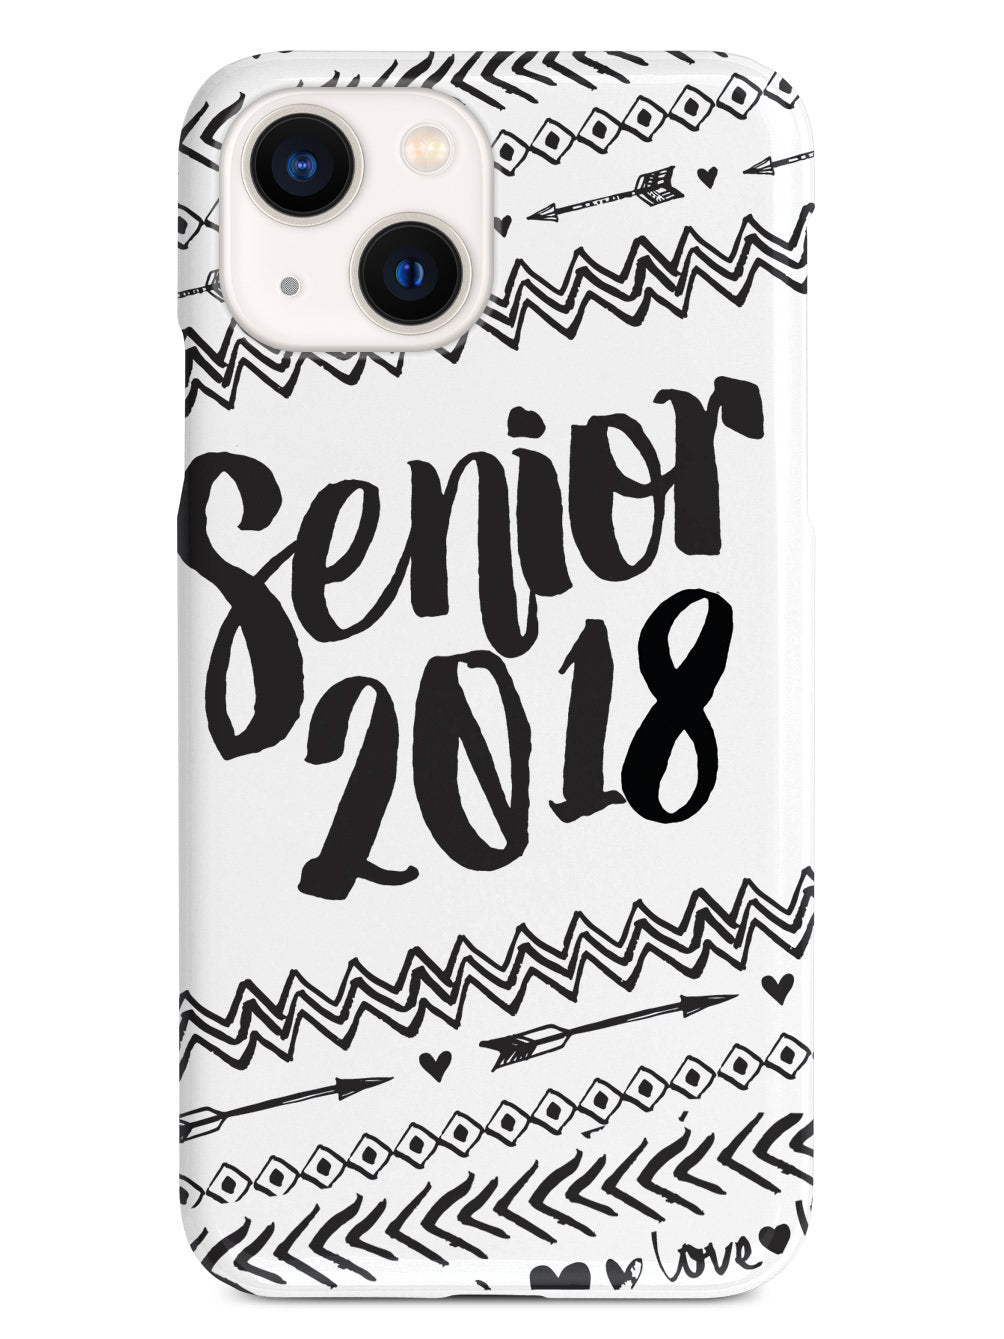 Senior 2018 - Black Case